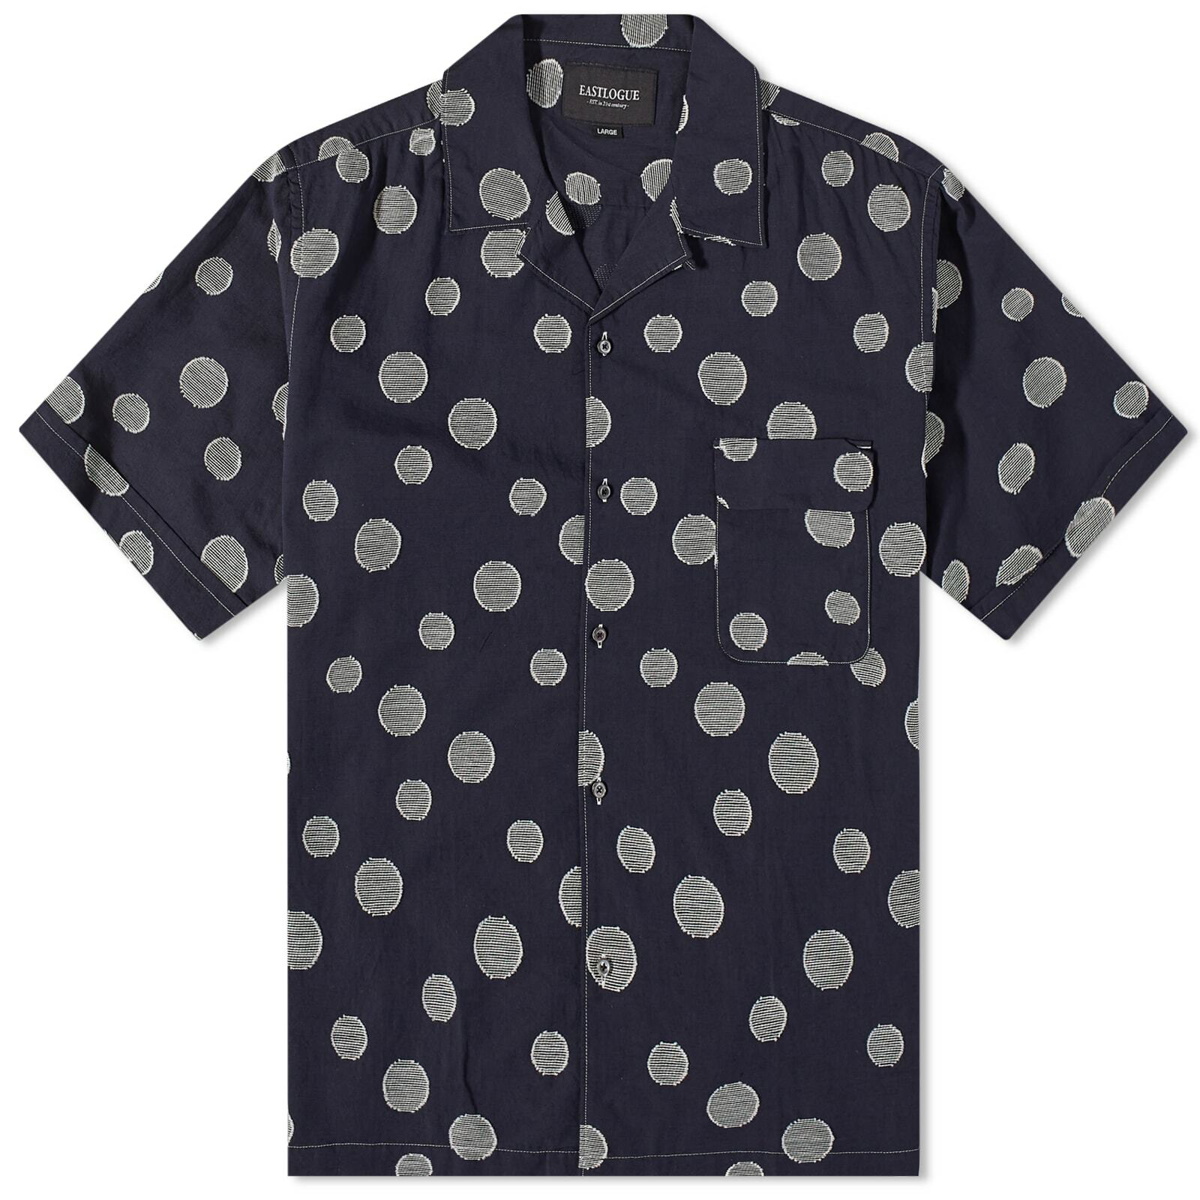 Eastlogue Men's Holiday Short Sleeve Shirt in Black/White Dot Eastlogue